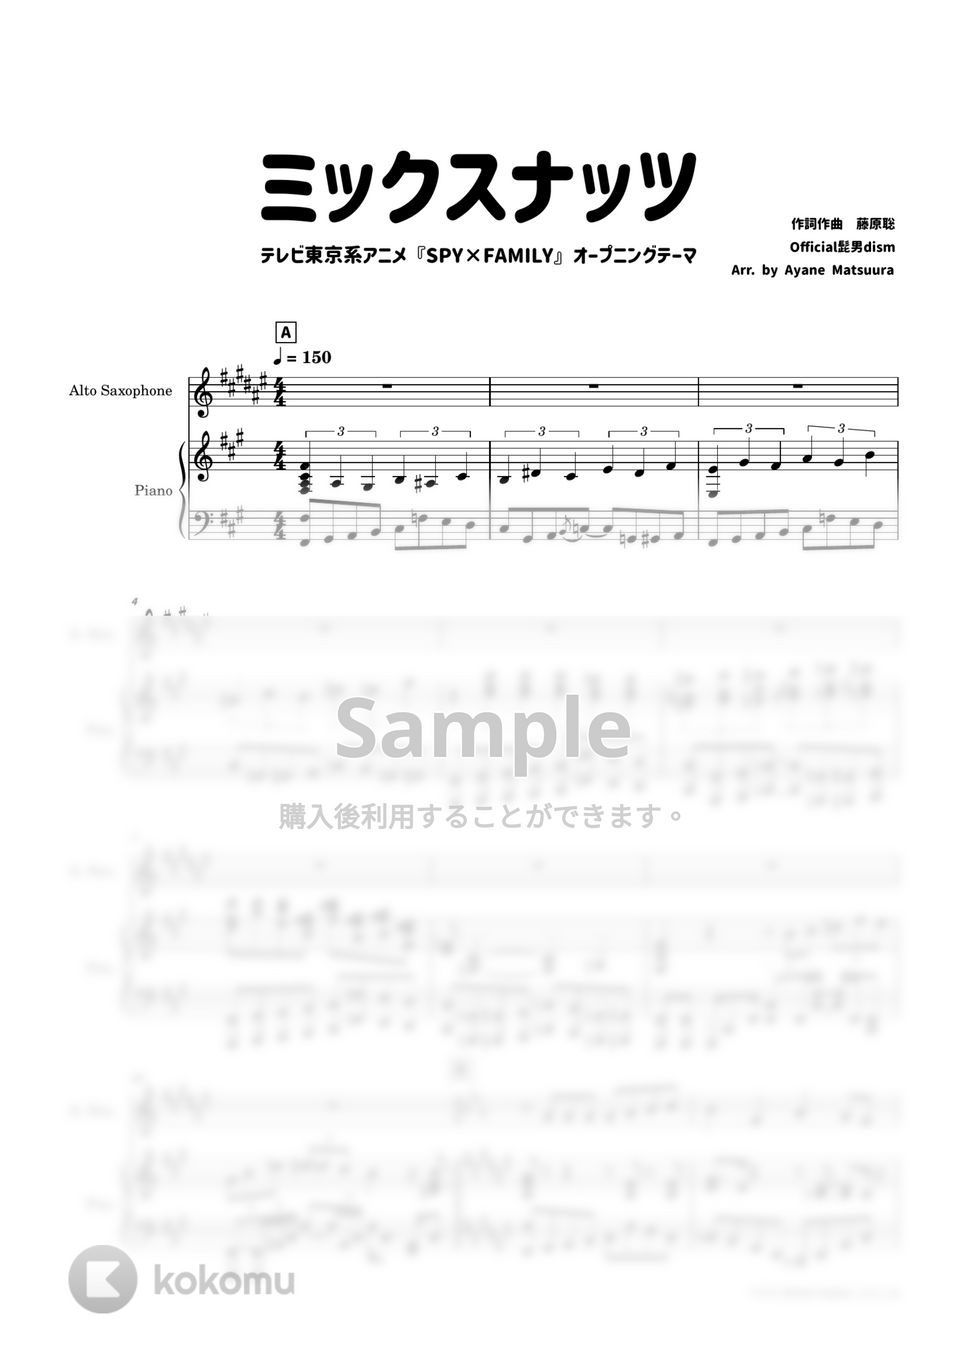 Official髭男dism - 【アルトサックス＆ピアノ】原調ミックスナッツ（Official髭男dism） by 管楽器の楽譜★ふるすこあ